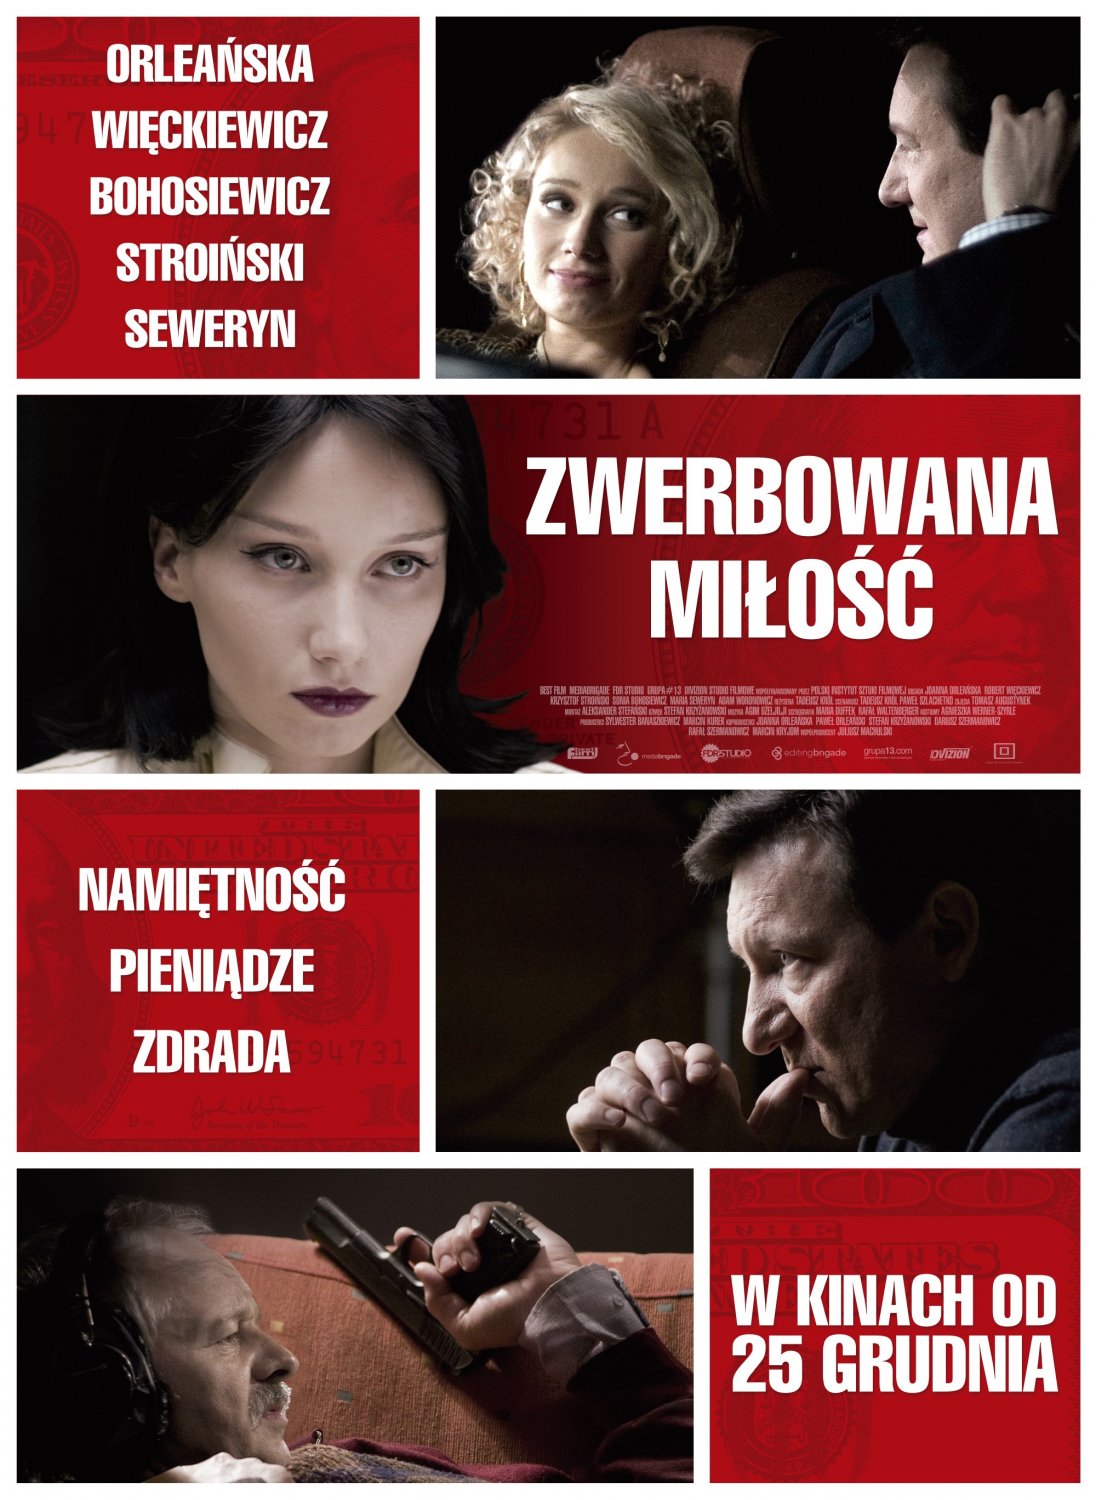 Extra Large Movie Poster Image for Zwerbowana milosc 